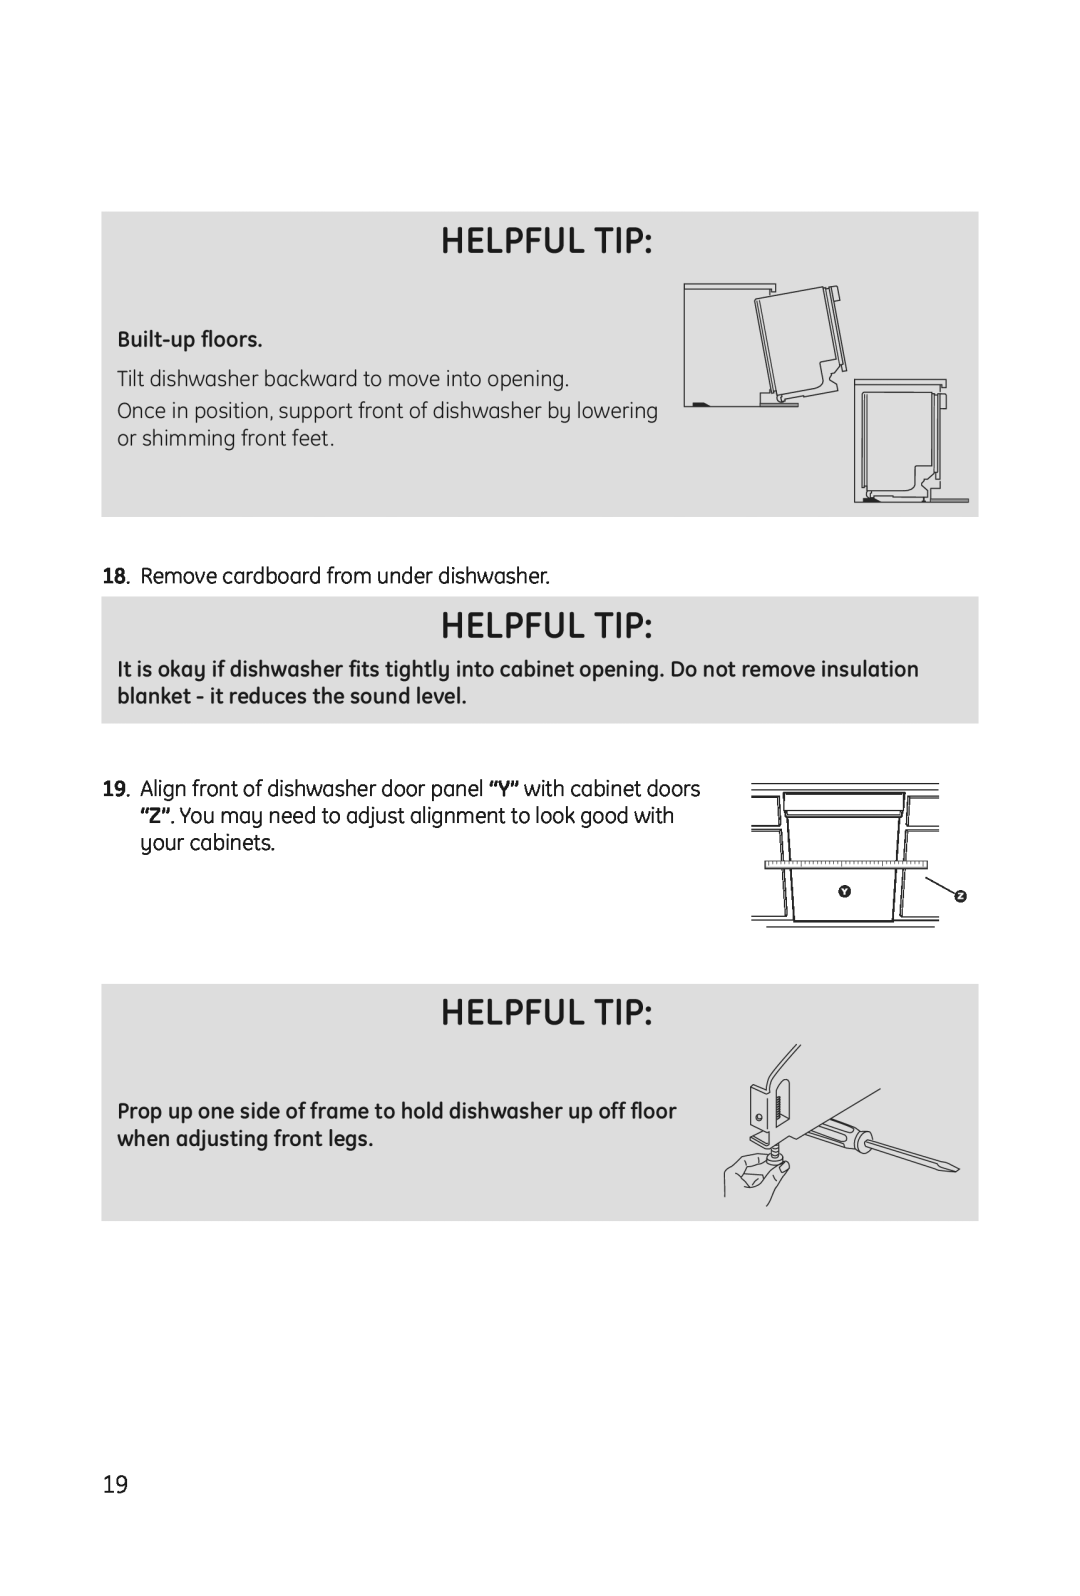 Haier DWL3025 installation manual Helpful Tip, Built-up floors, Tilt dishwasher backward to move into opening 